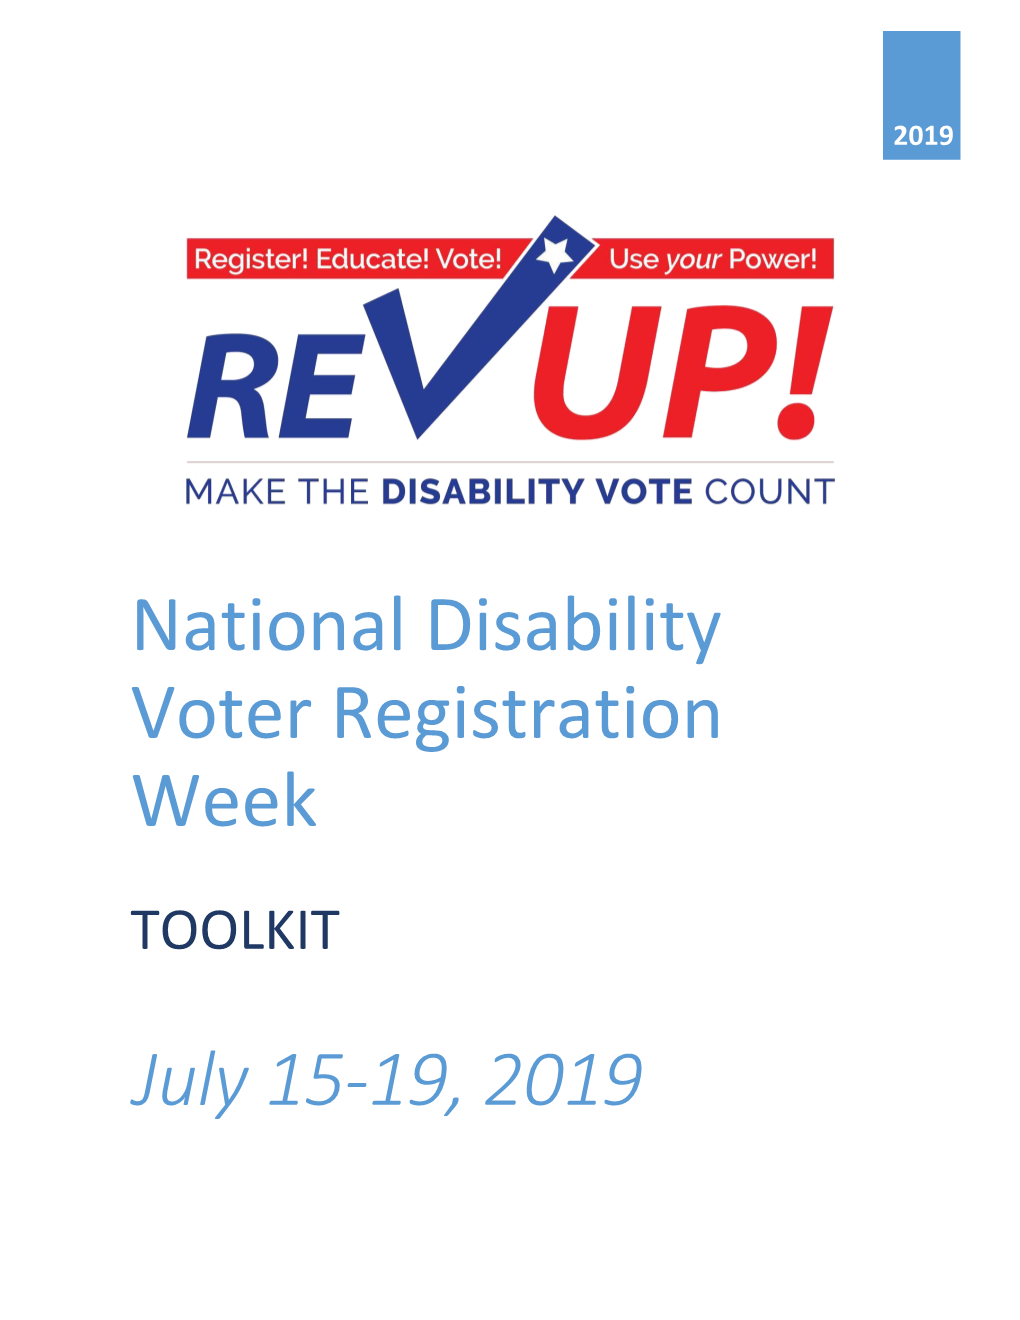 National Disability Voter Registration Week TOOLKIT